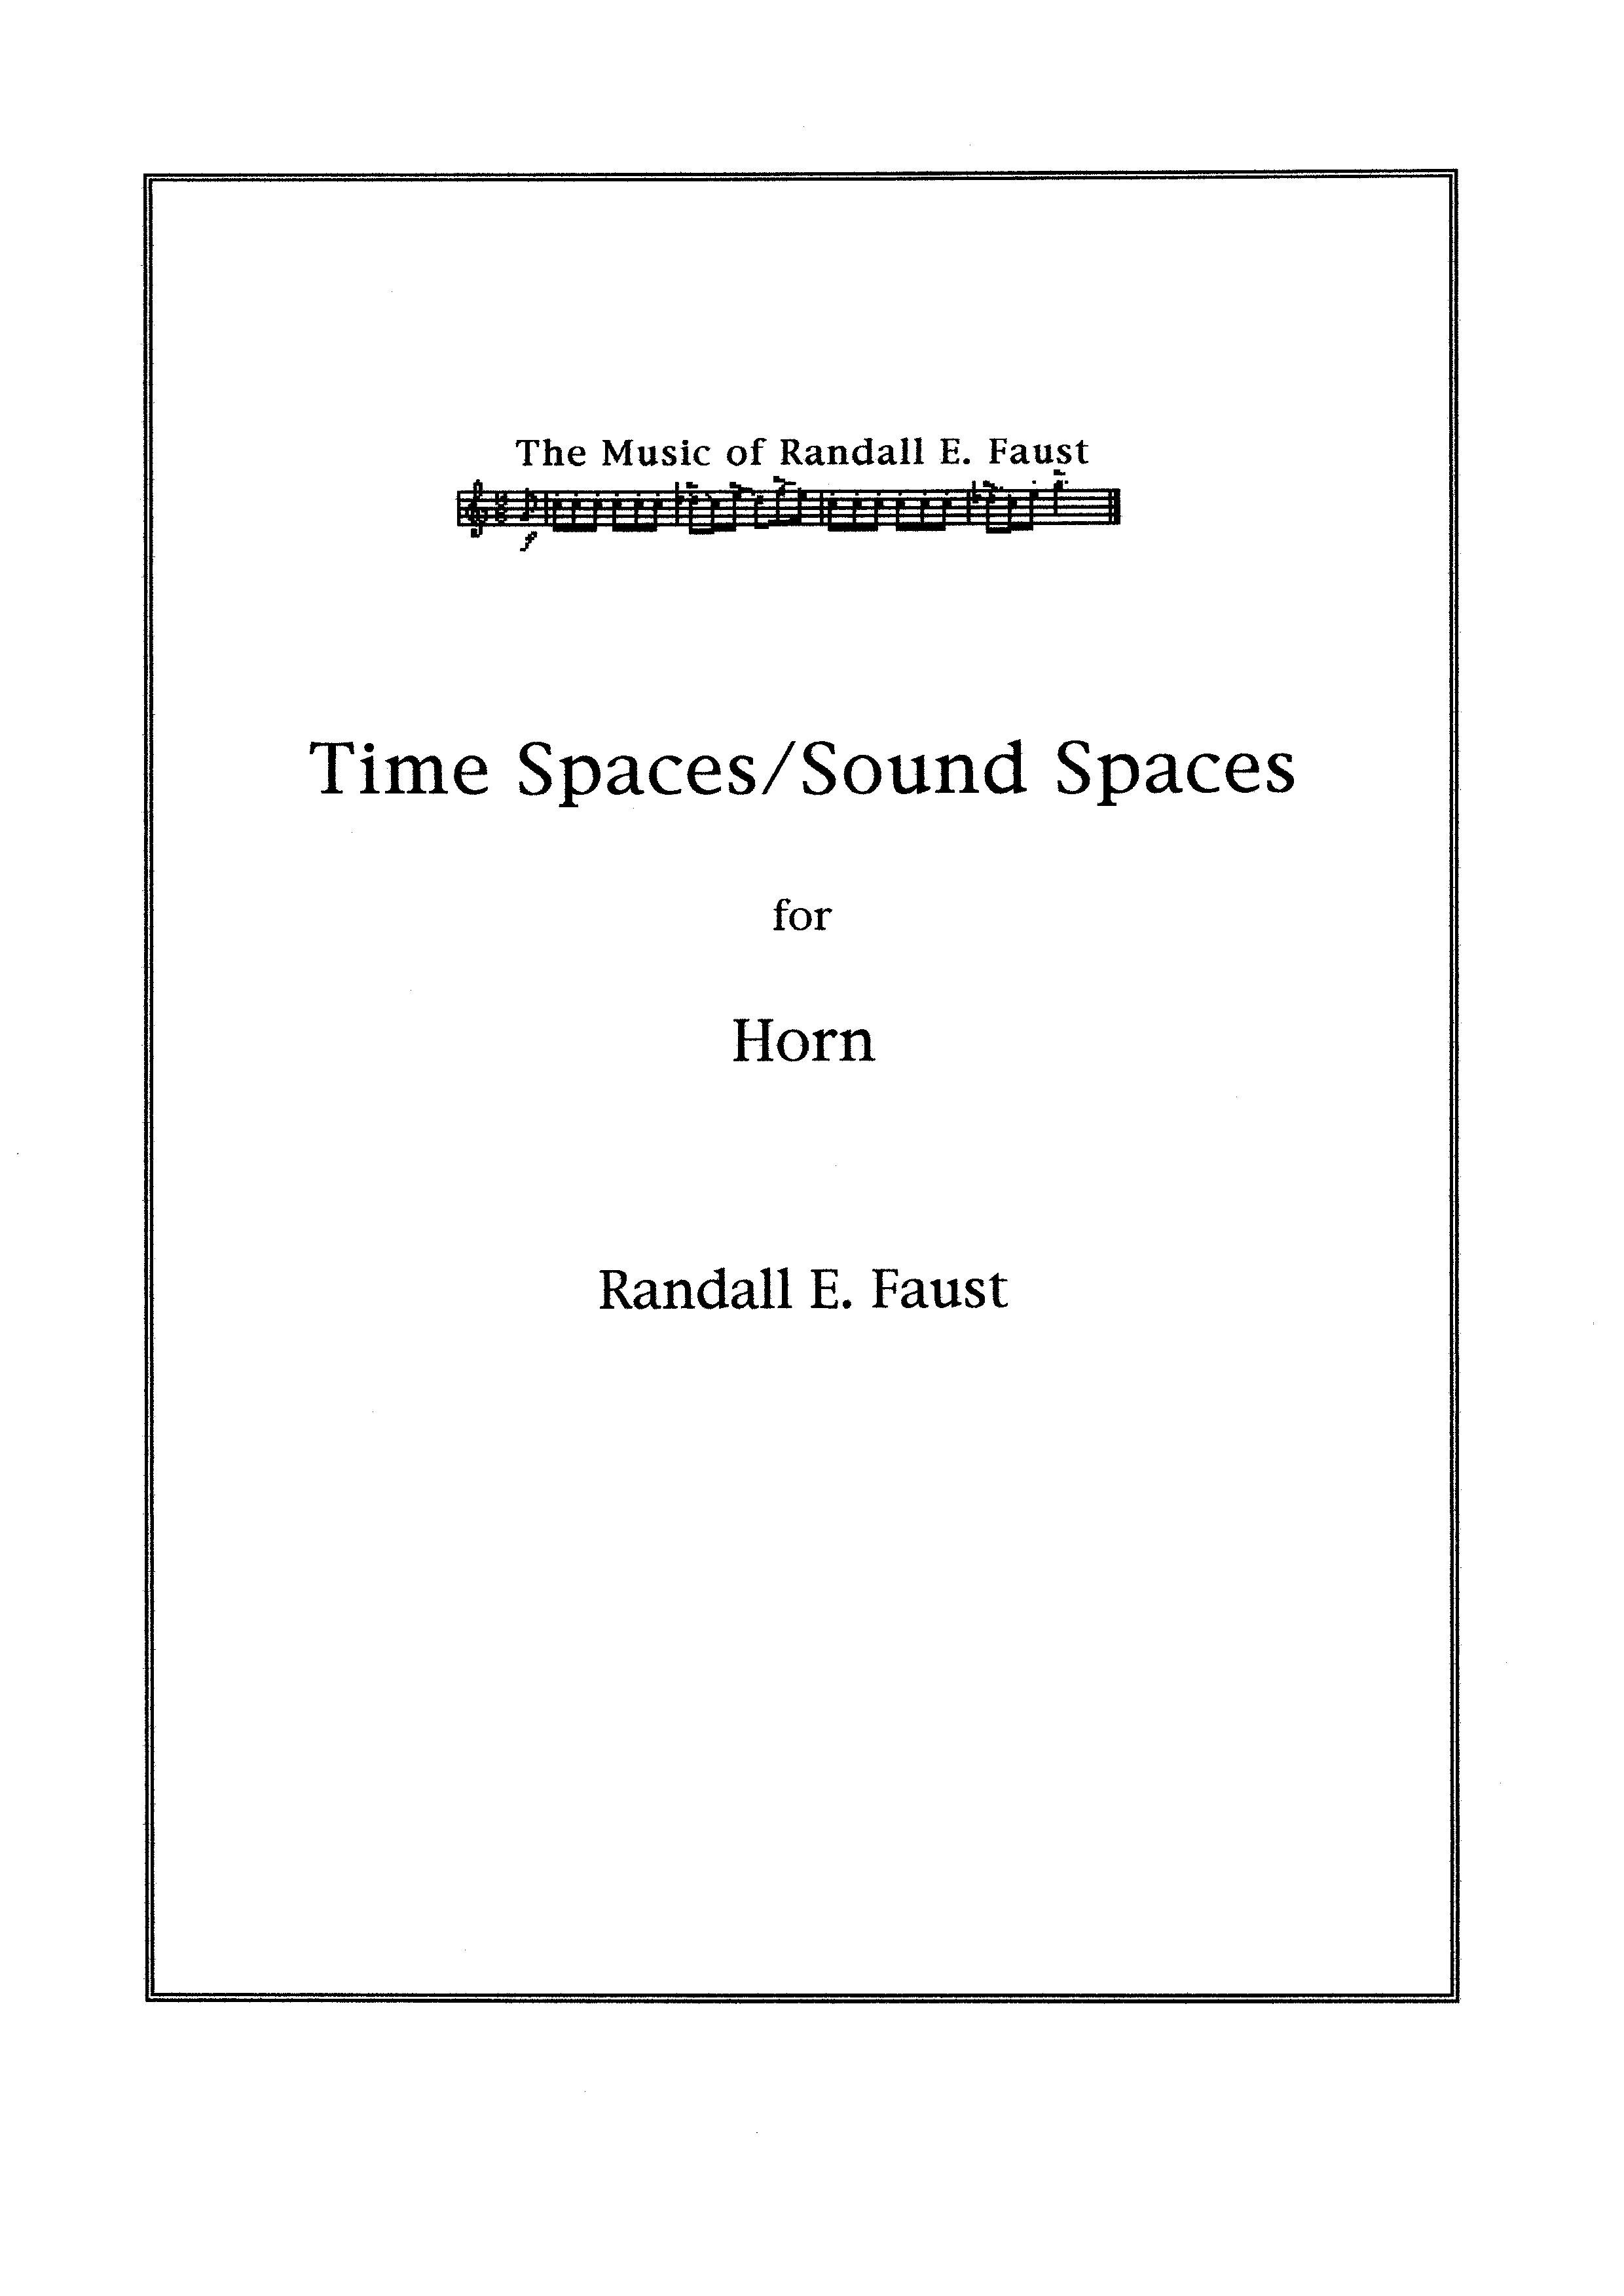 TIME SPACES/SOUND SPACES - Brass (Tpt, Hrn, Tbn, Eup, Tba) - Ship to Me 